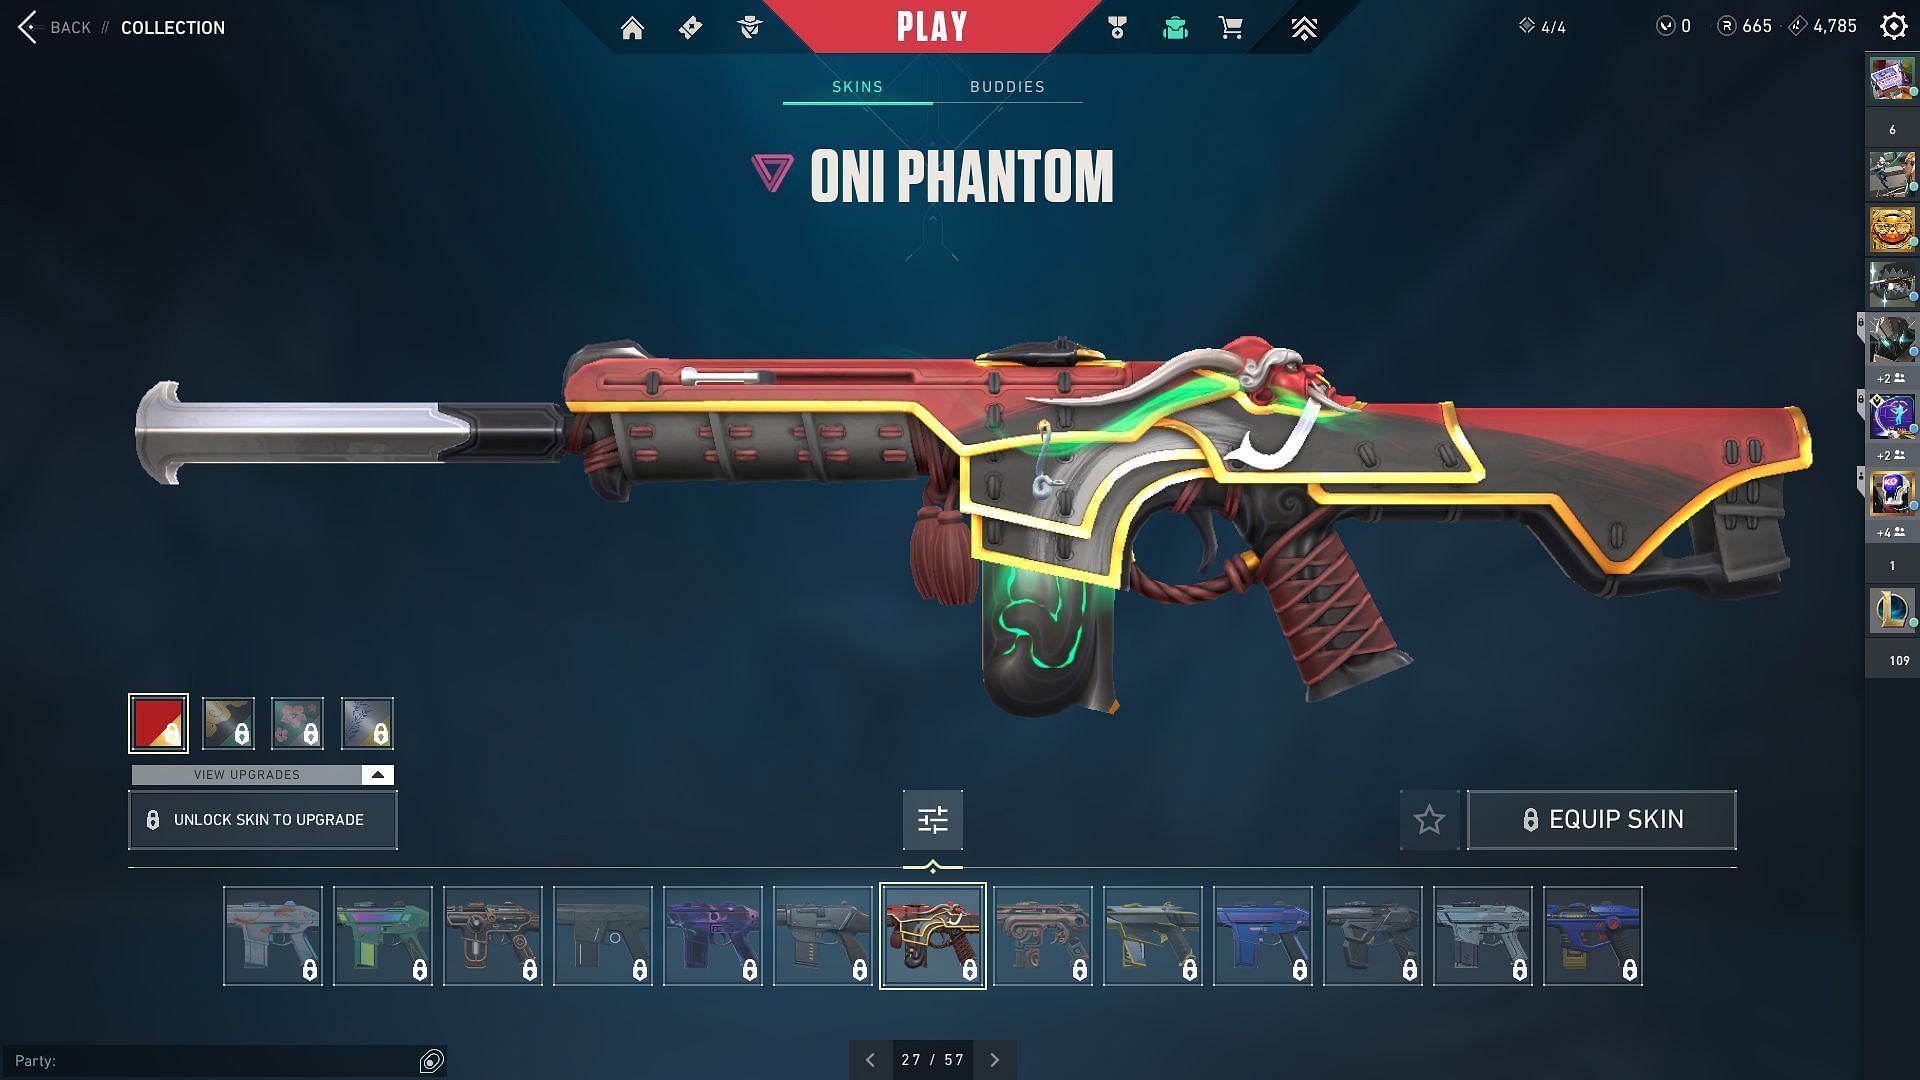 The Oni Phantom (Image via Riot Games)